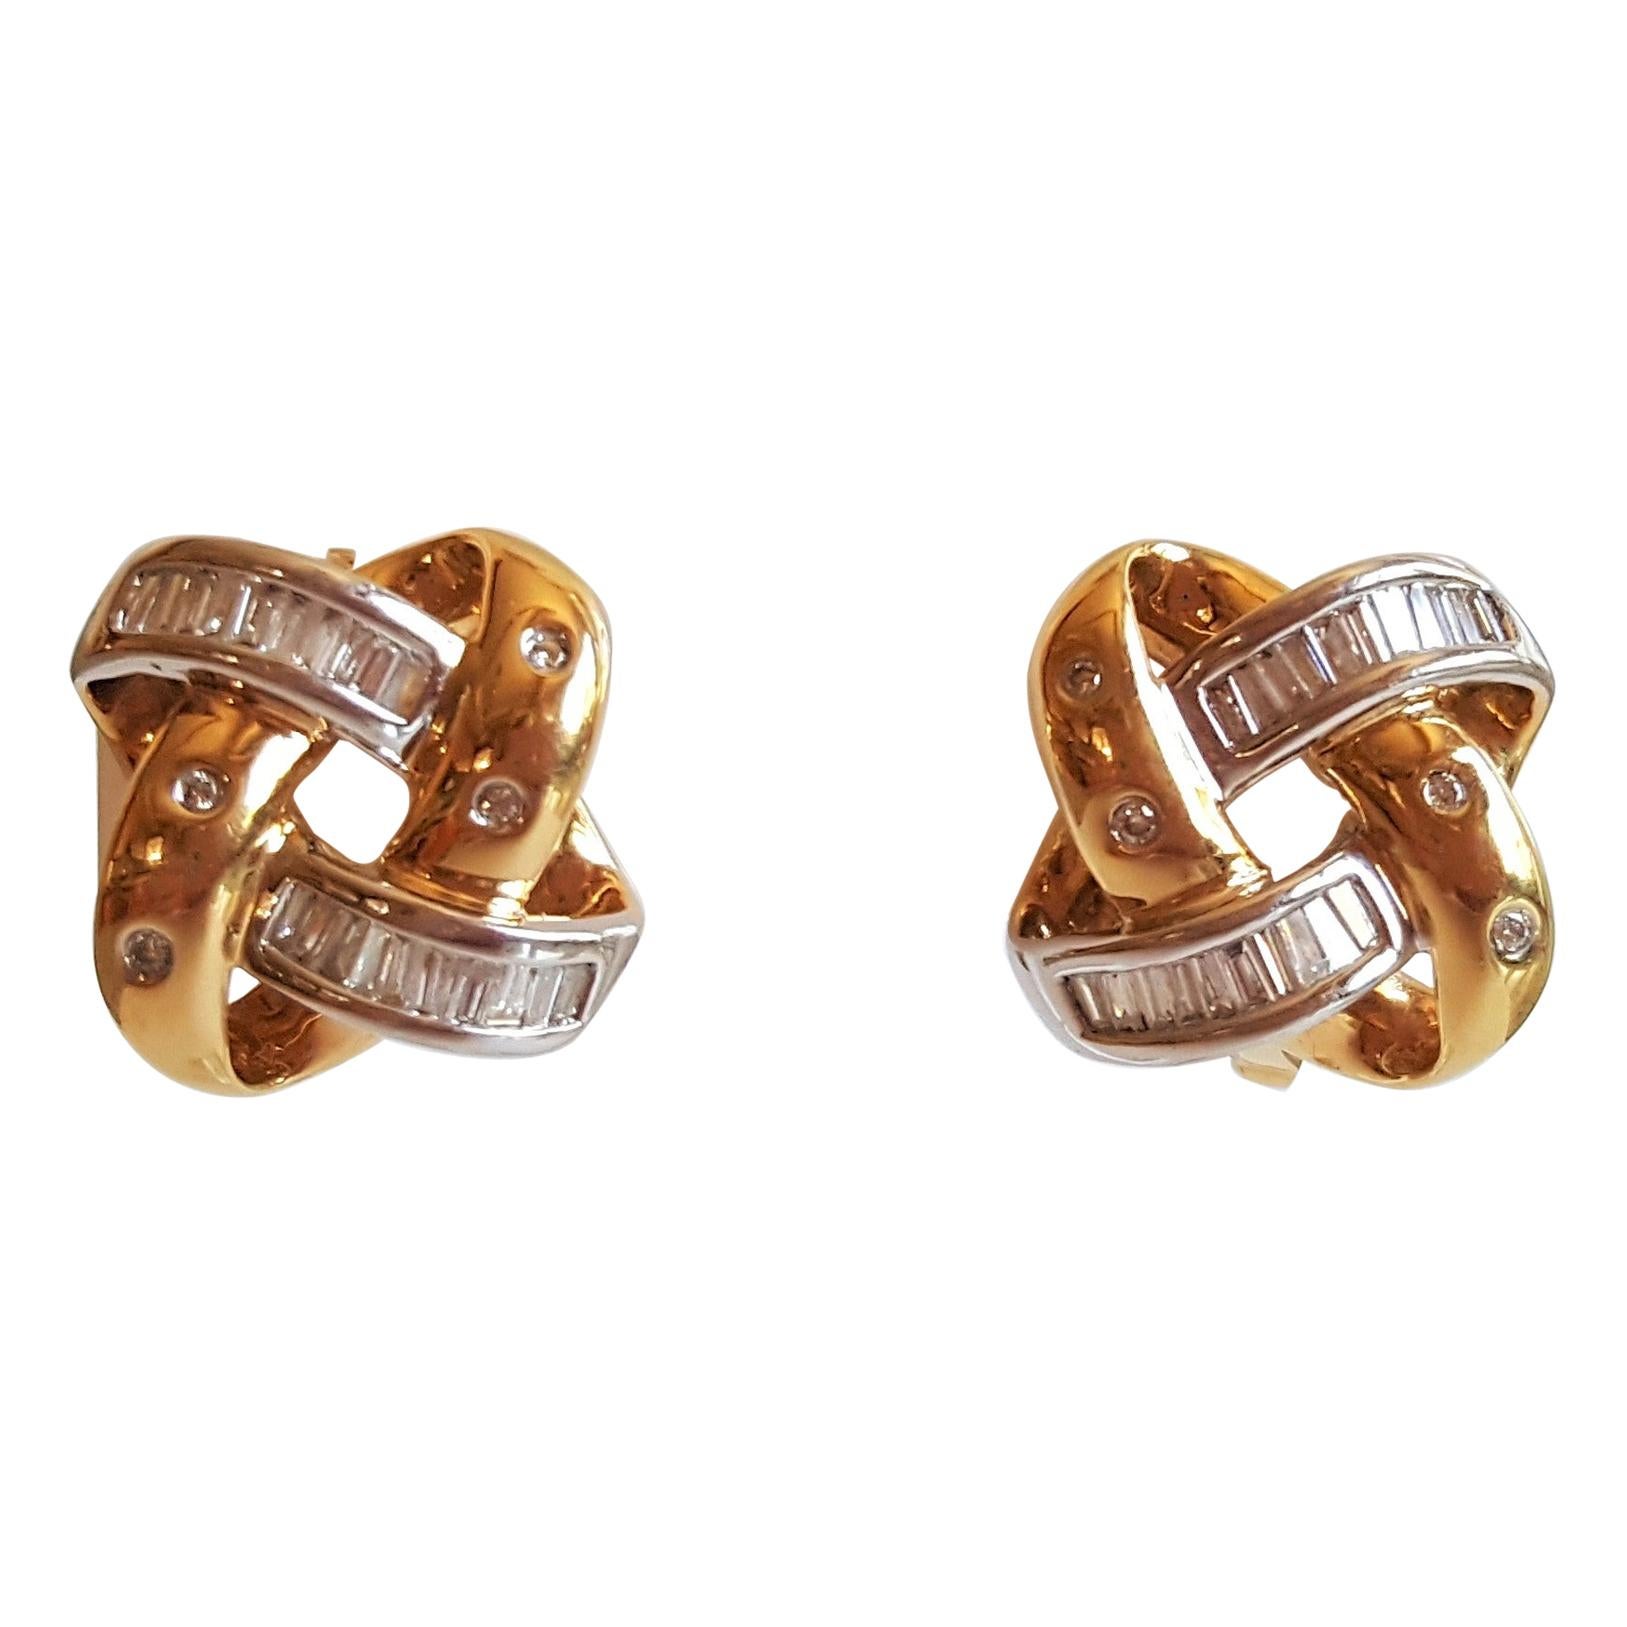 18kt Two-Tone Diamond Knot Earrings, Approx. 2.00Cttw Diamonds, 13.5 grams